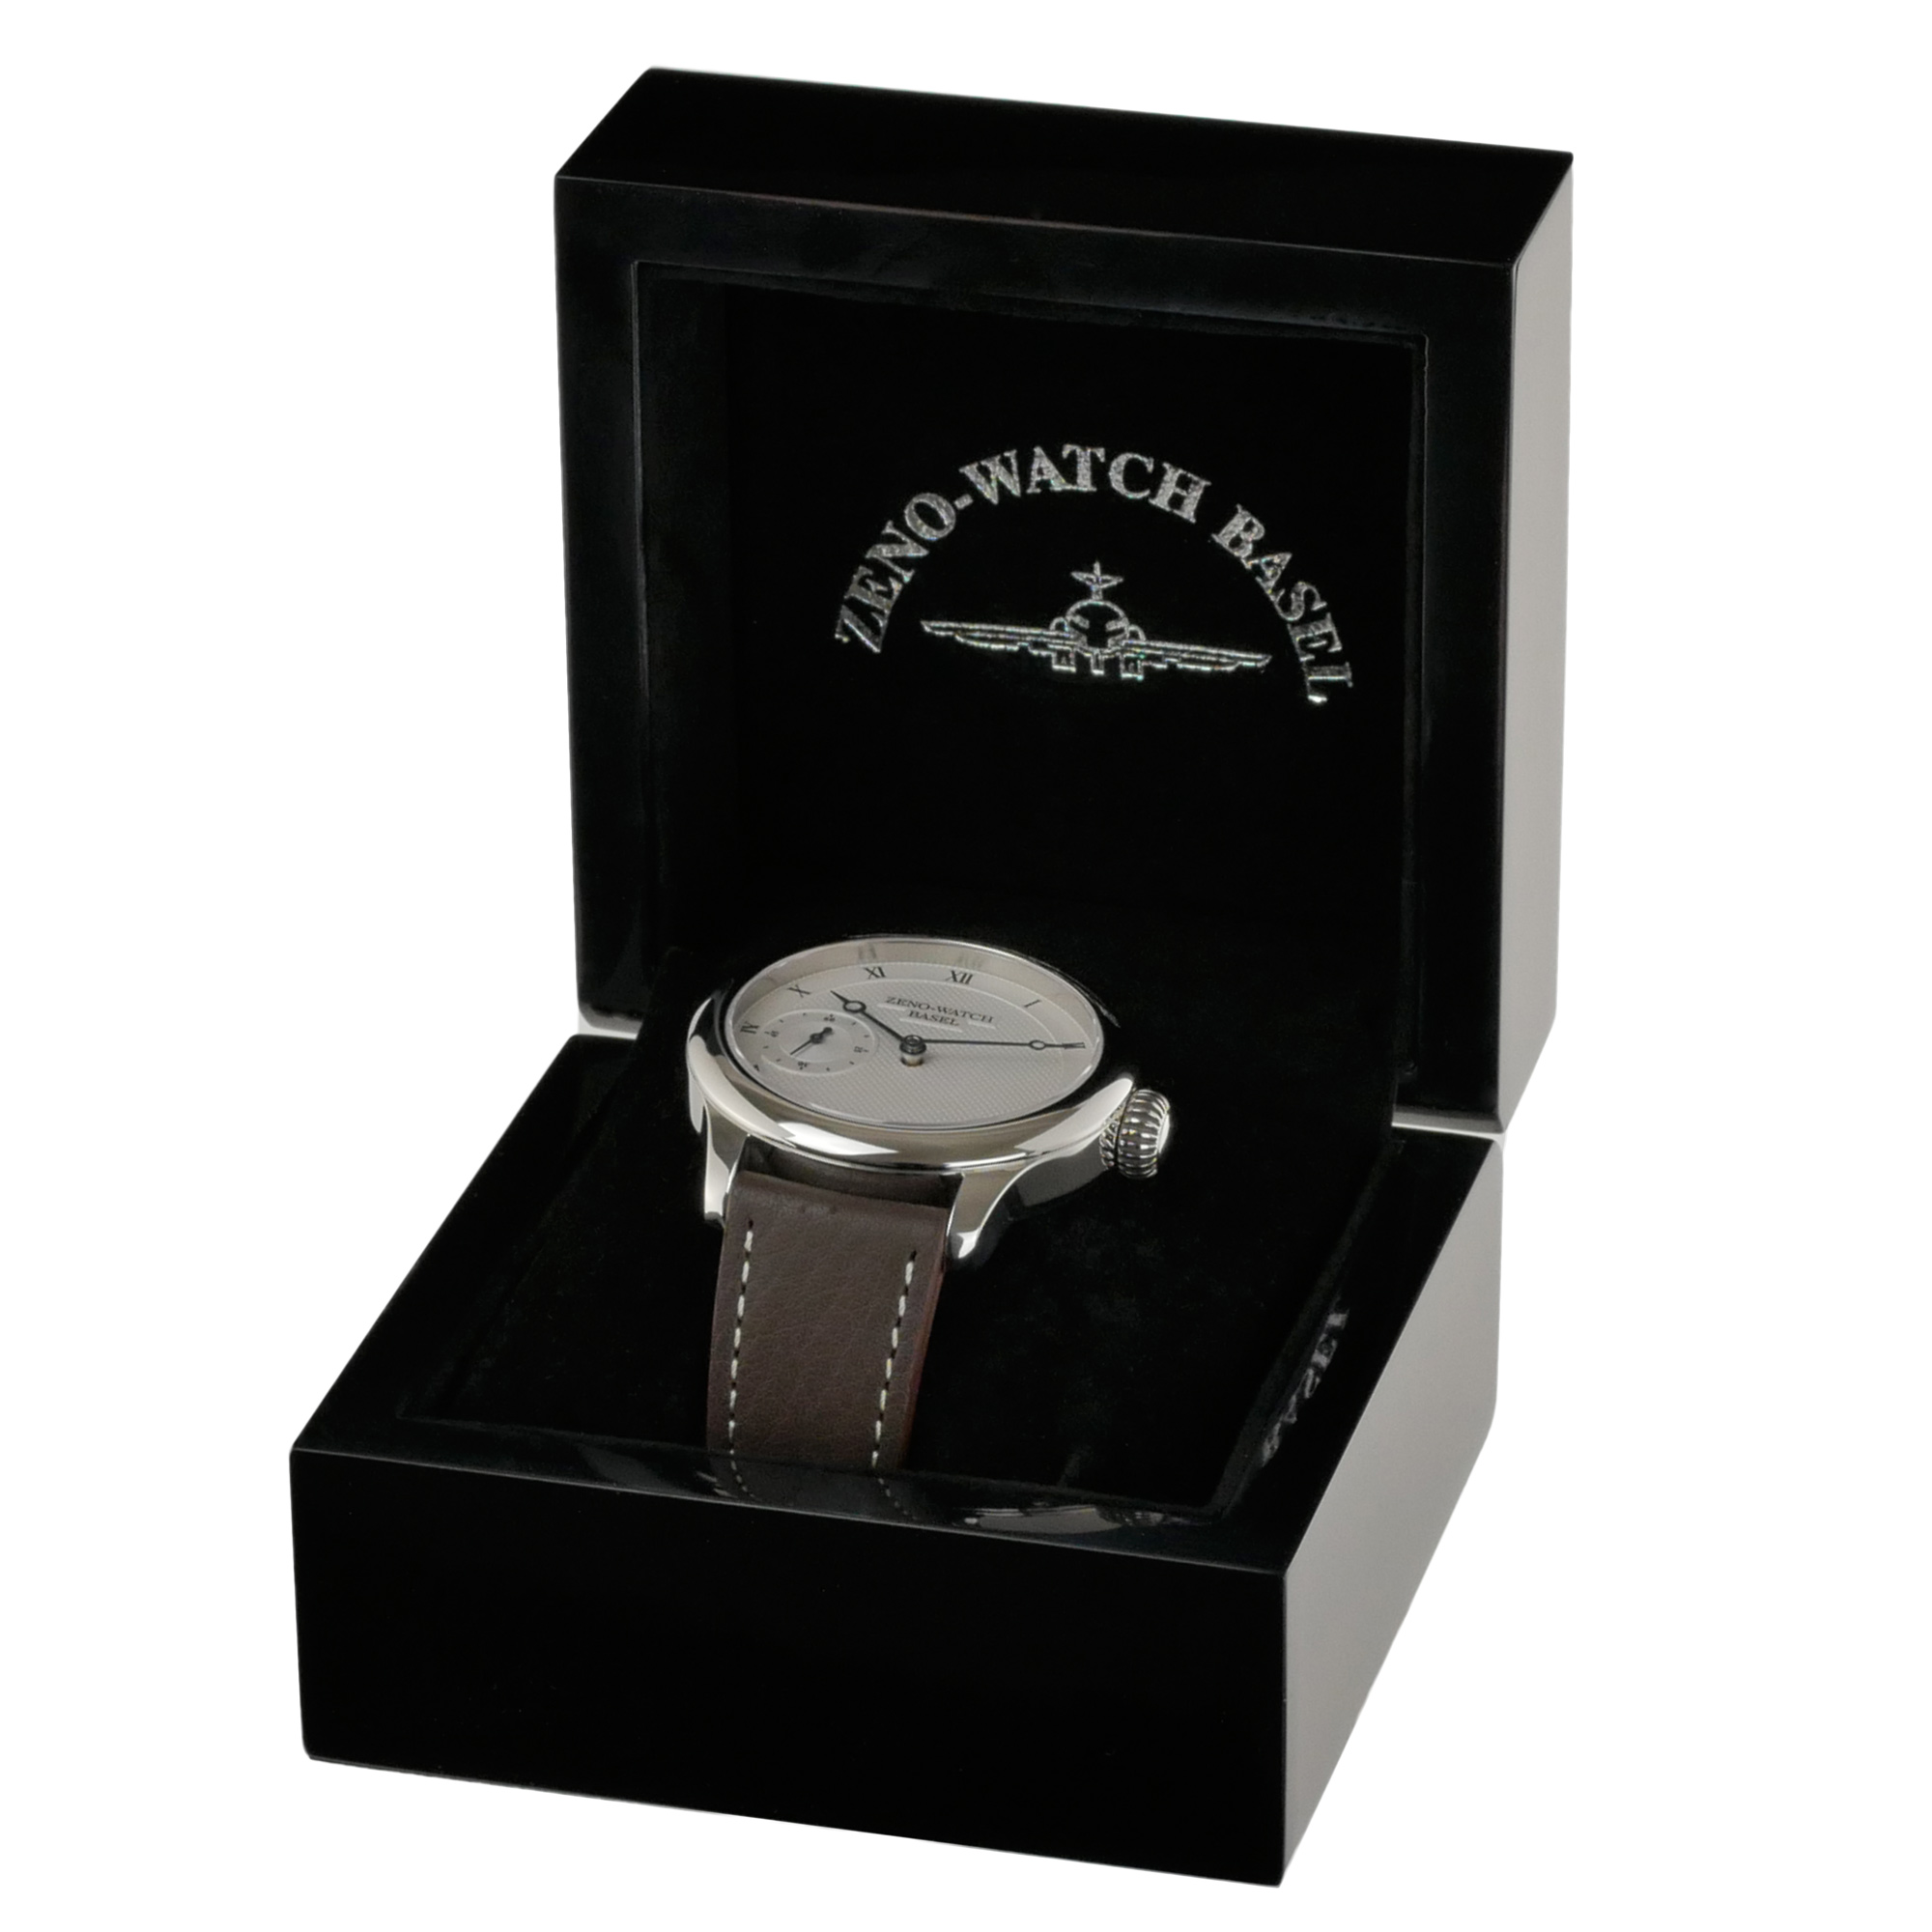 Zeno-Watch Basel Men's Watch Revue Manual Pocket Watch - Limited Edition 1462-I3